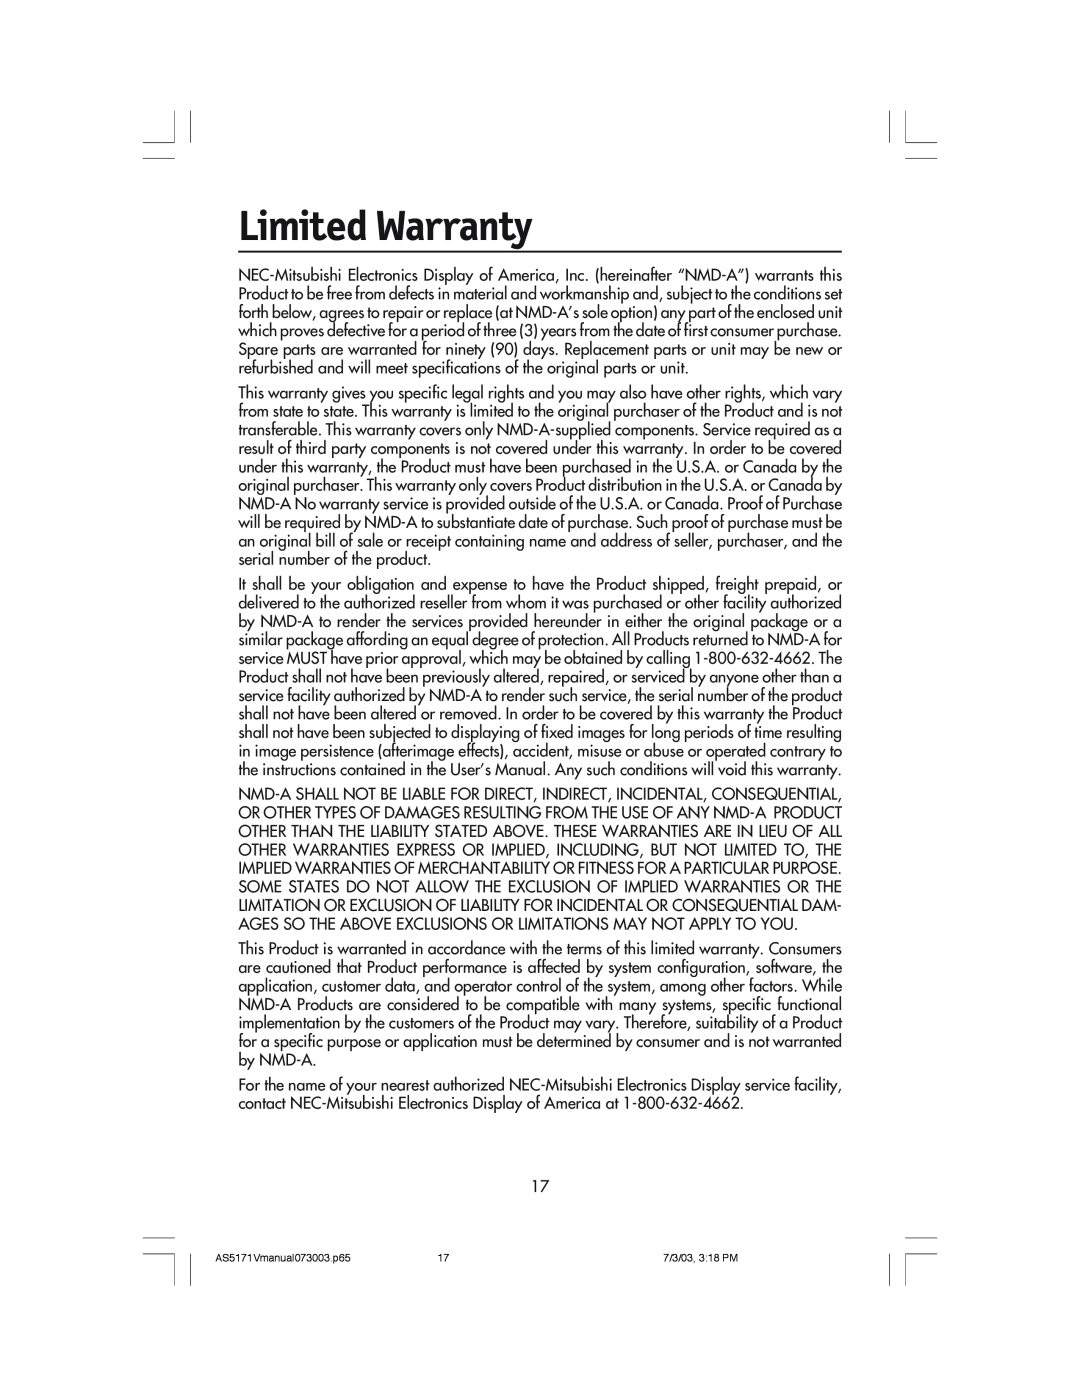 NEC LCD71V manual Limited Warranty 